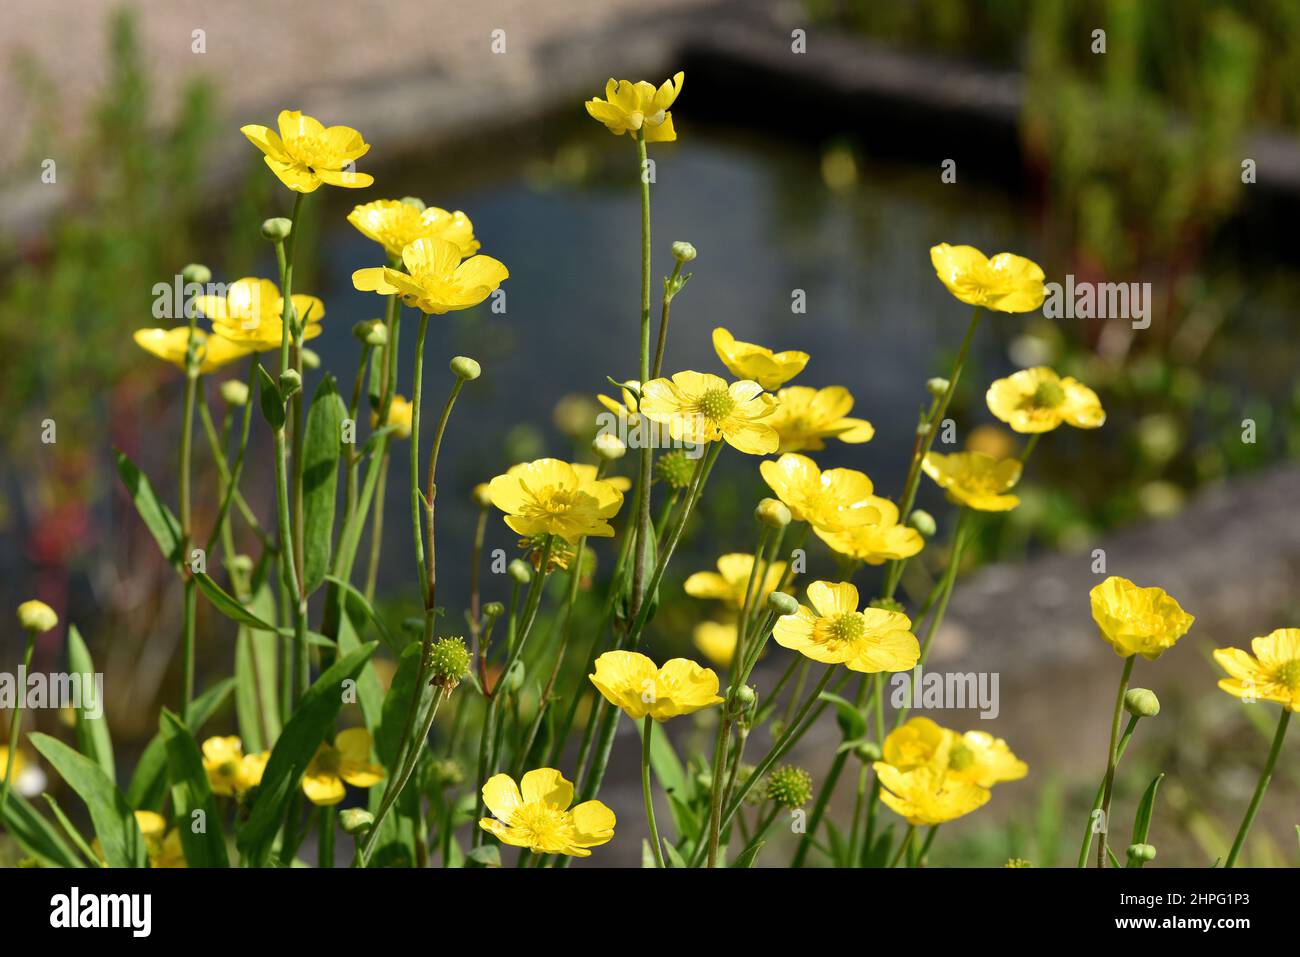 Zungenhahnenfuss, Ranunculus lingua ist eine Wasserpflanze mit gelben Blueten. Tongue buttercup, Ranunculus lingua is an aquatic plant with yellow flo Stock Photo